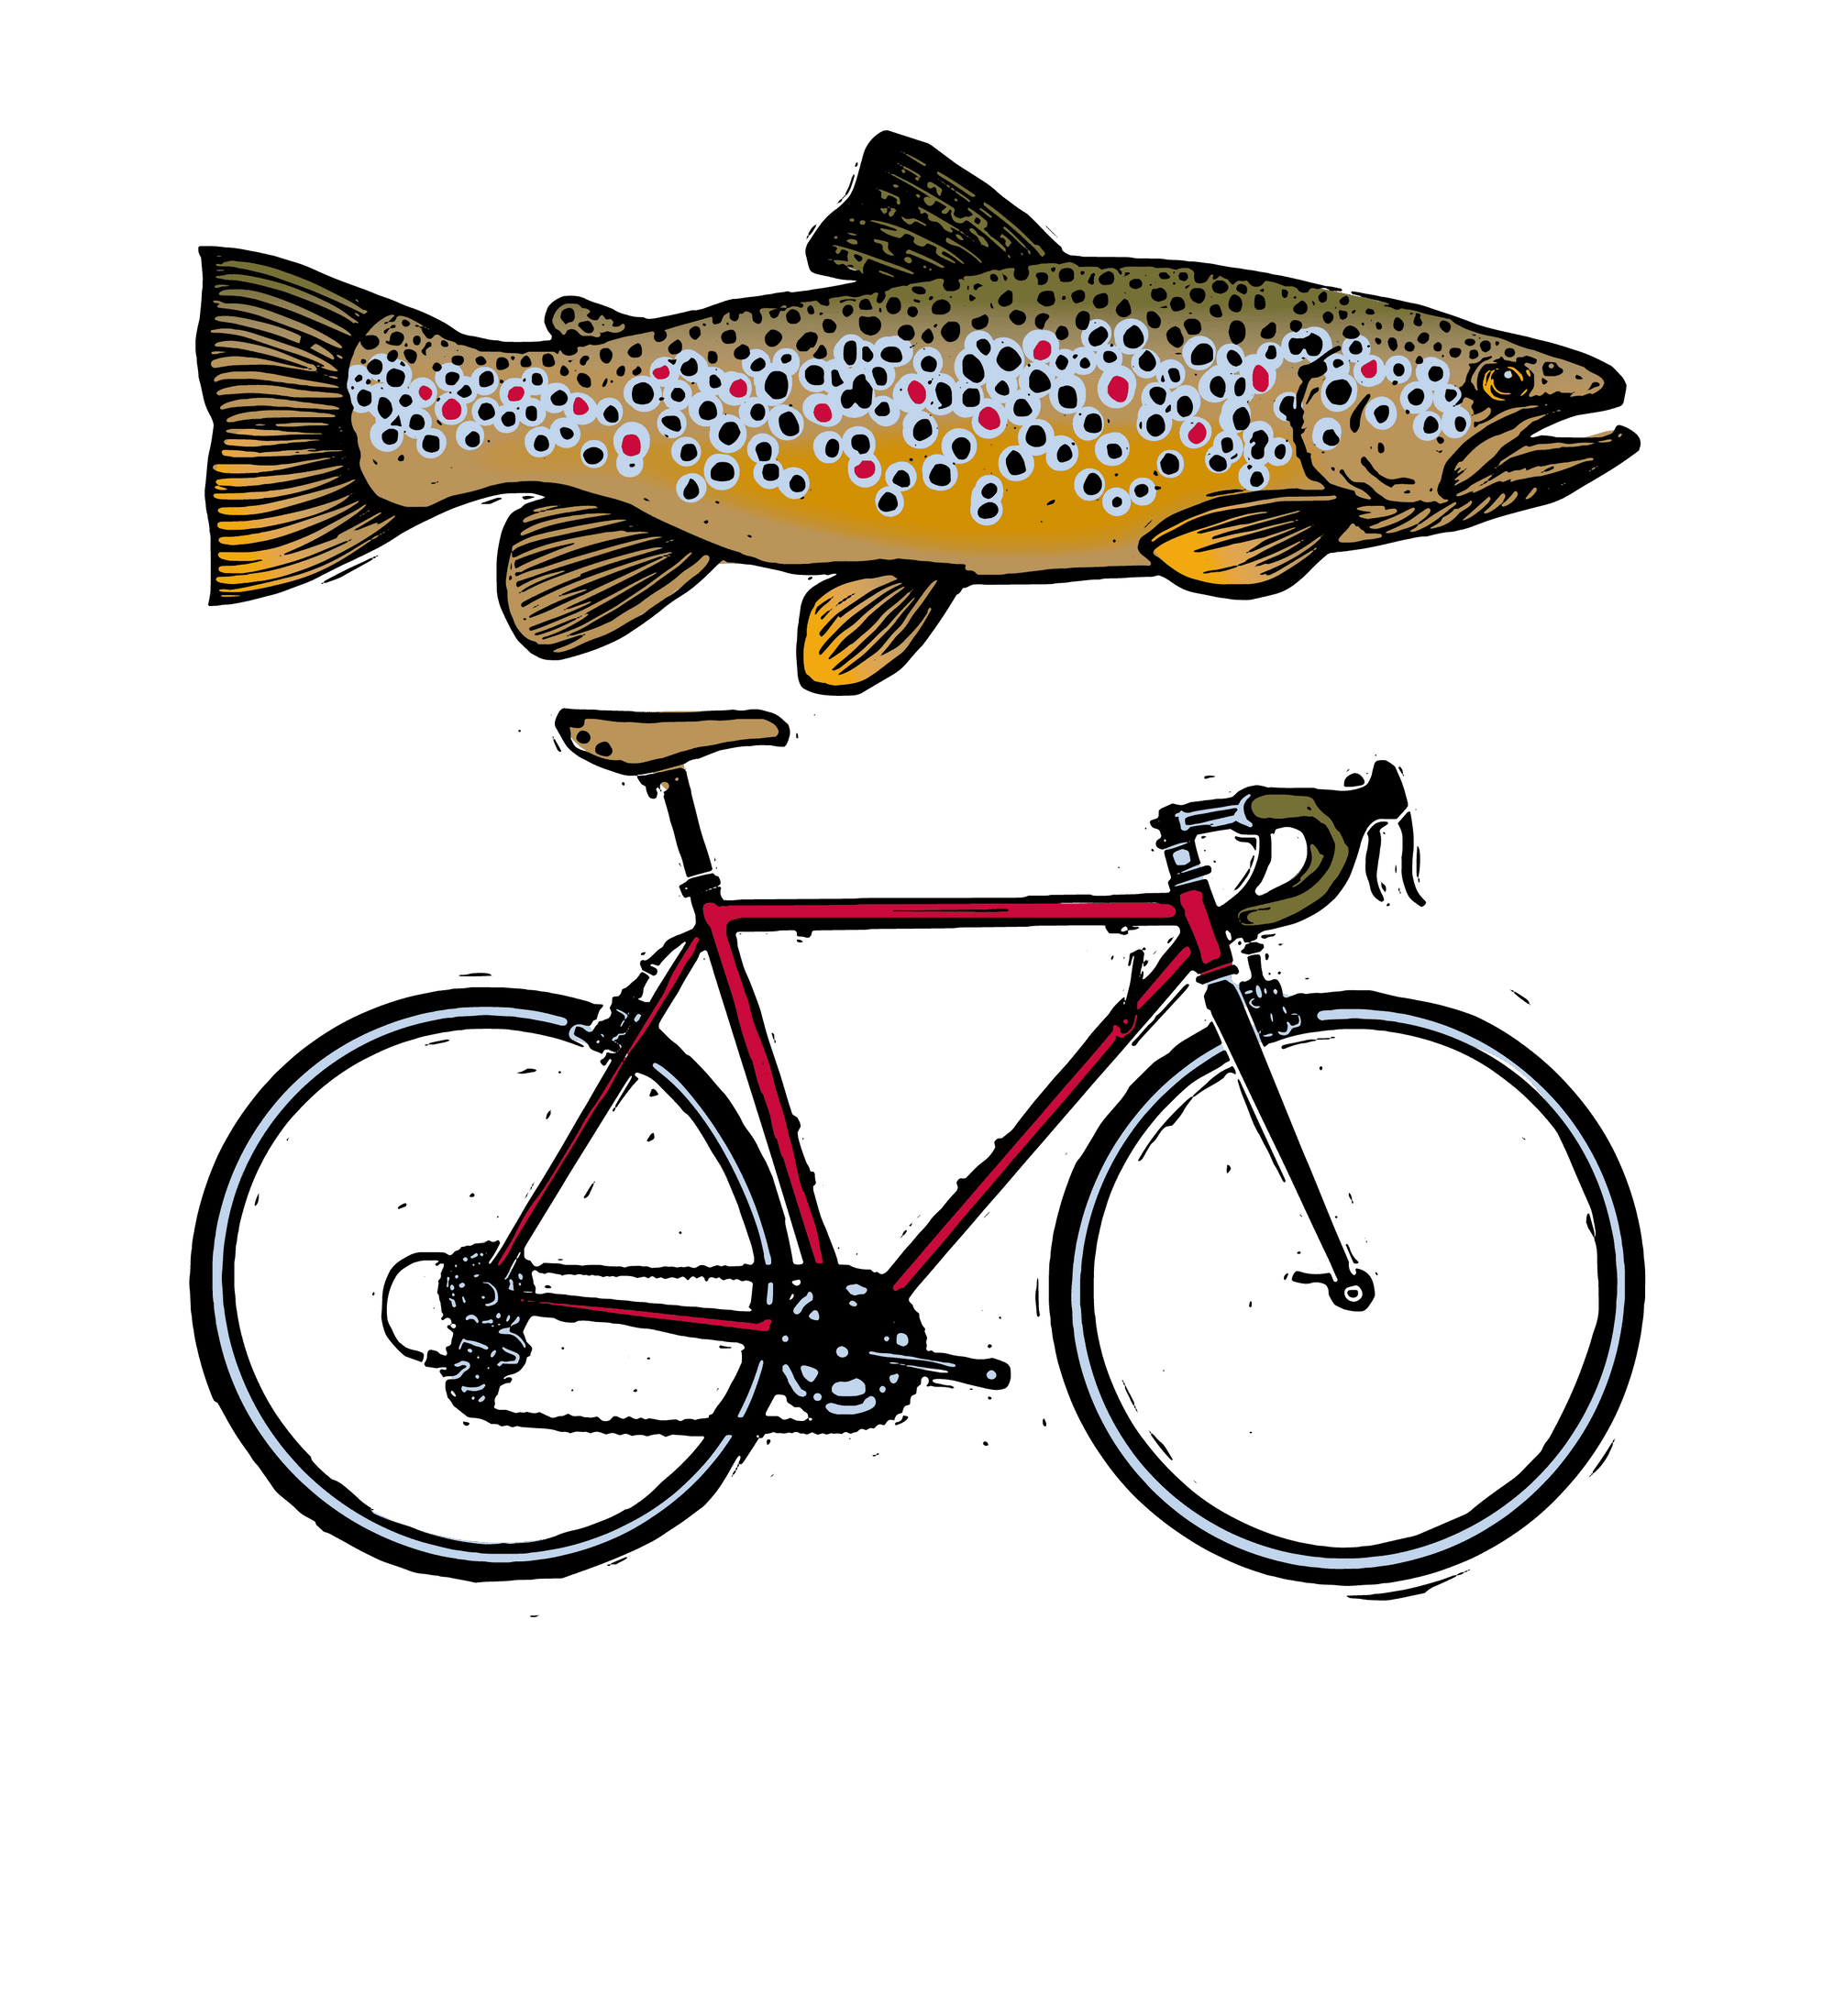 Men's T-shirt - Fish Bike